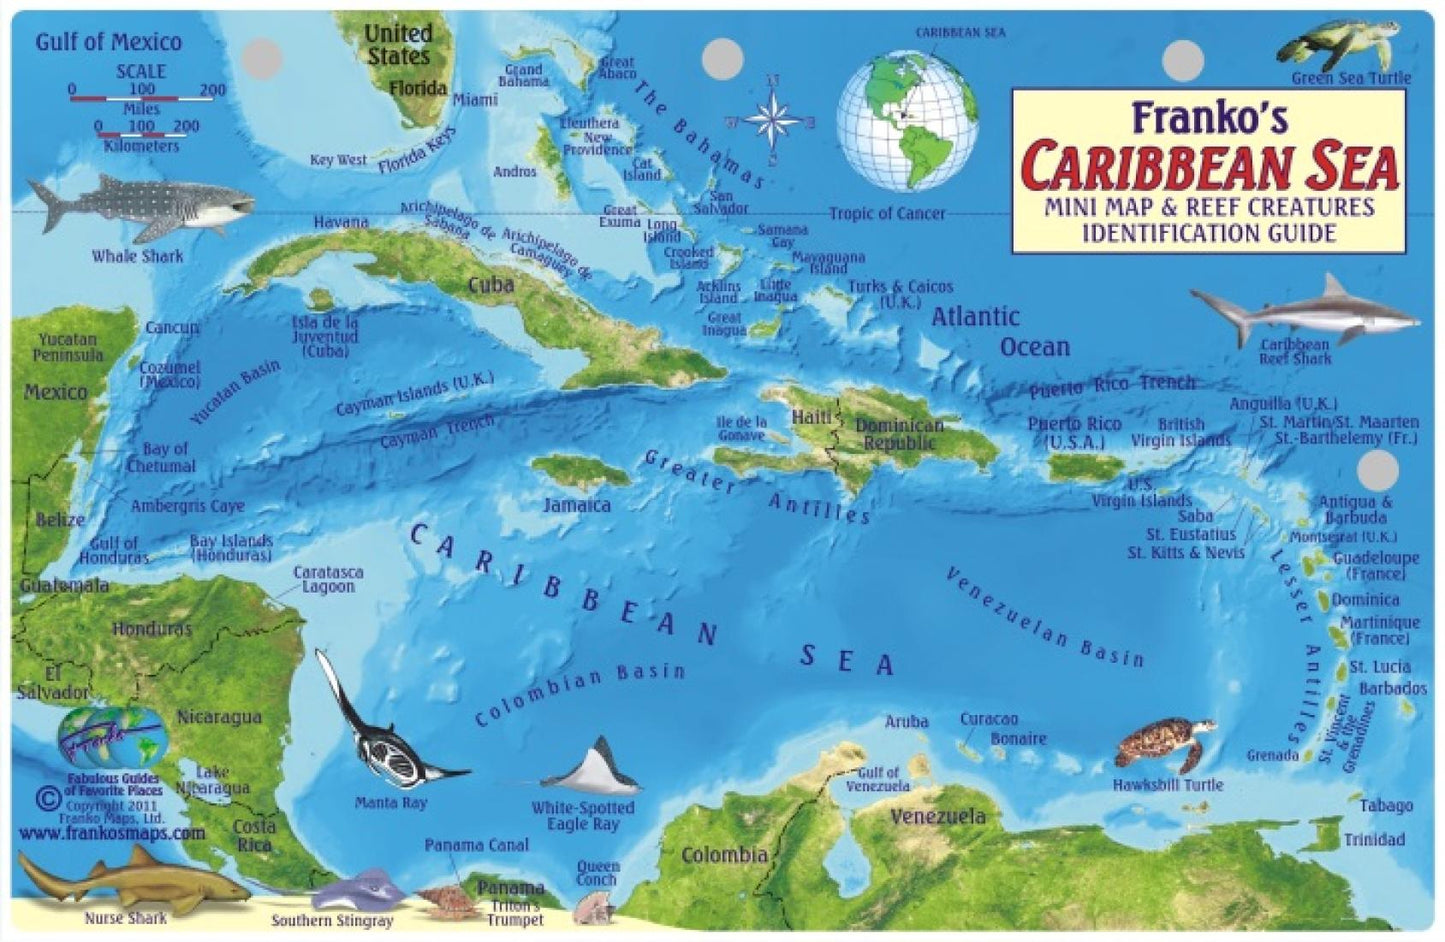 Franko's Caribbean Sea : mini map & reef creatures identification guide